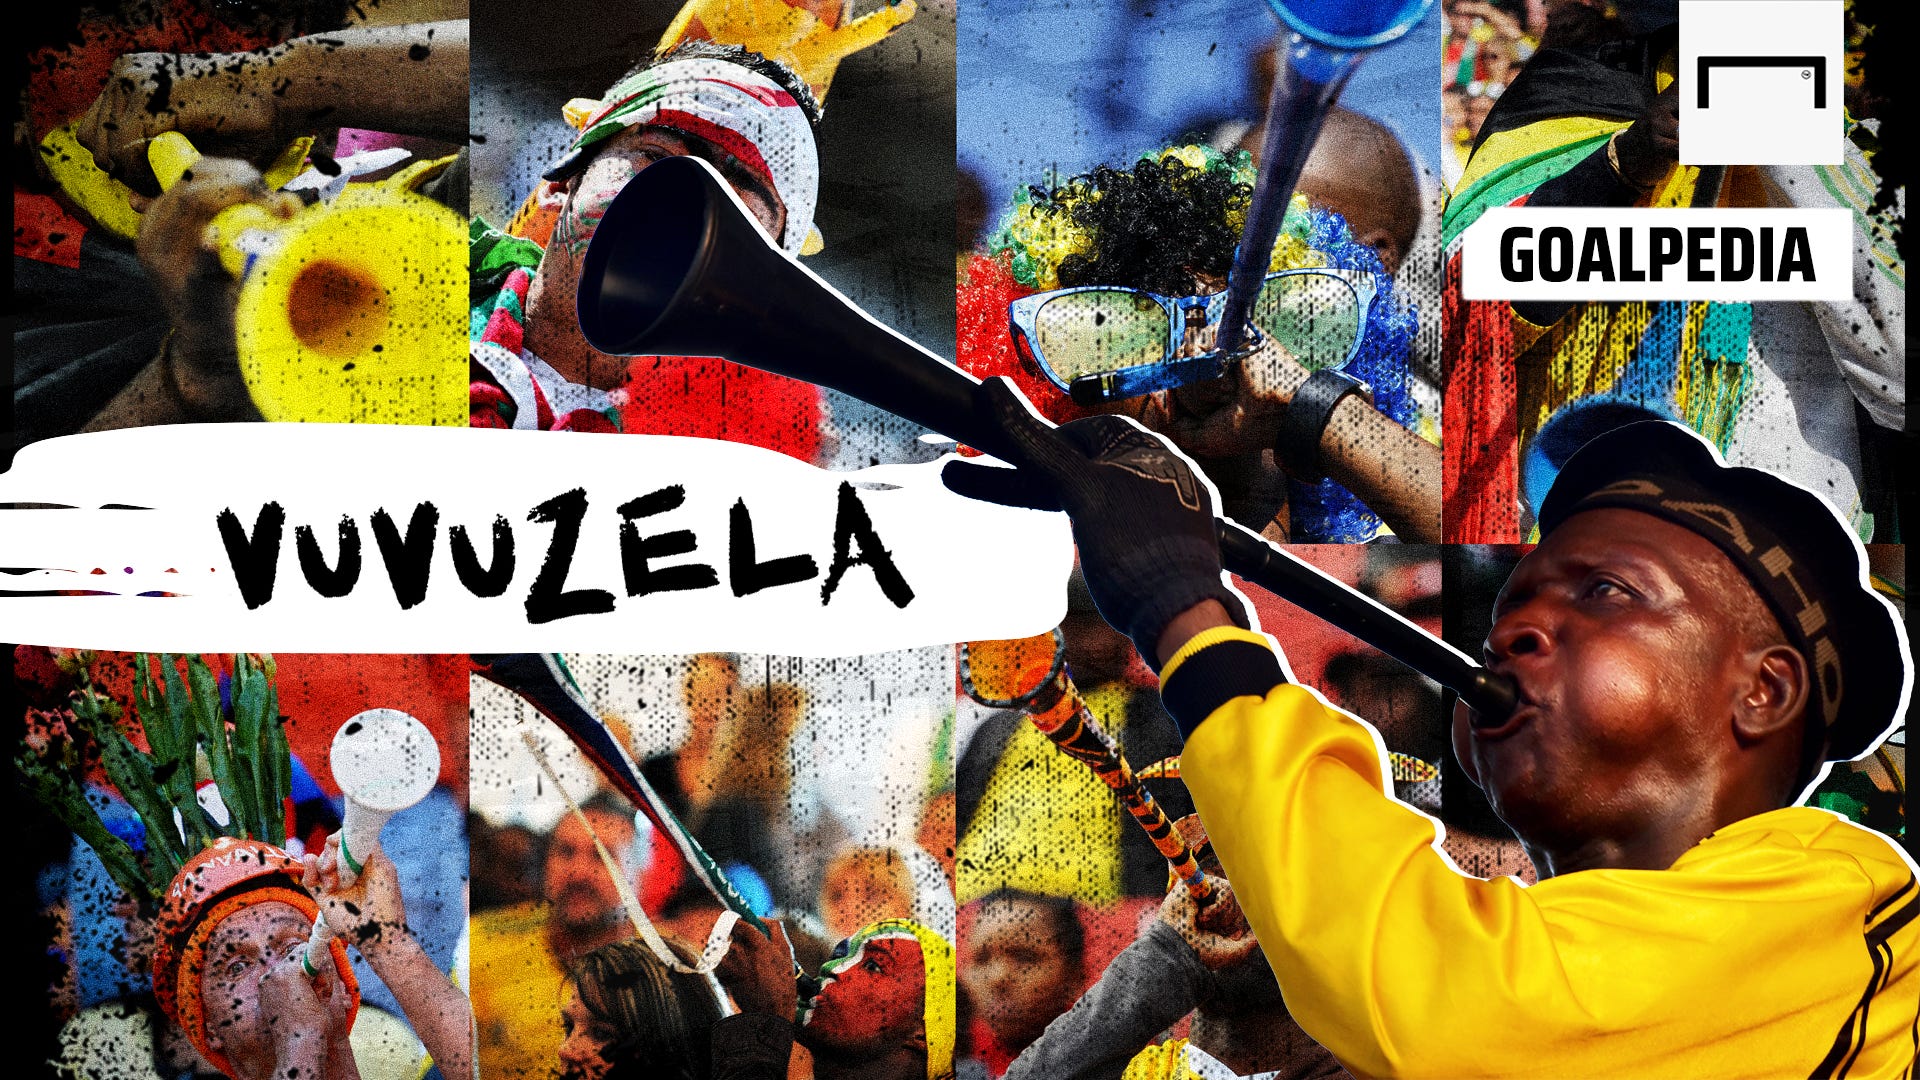 What happened to Vuvuzela? - Goalpedia